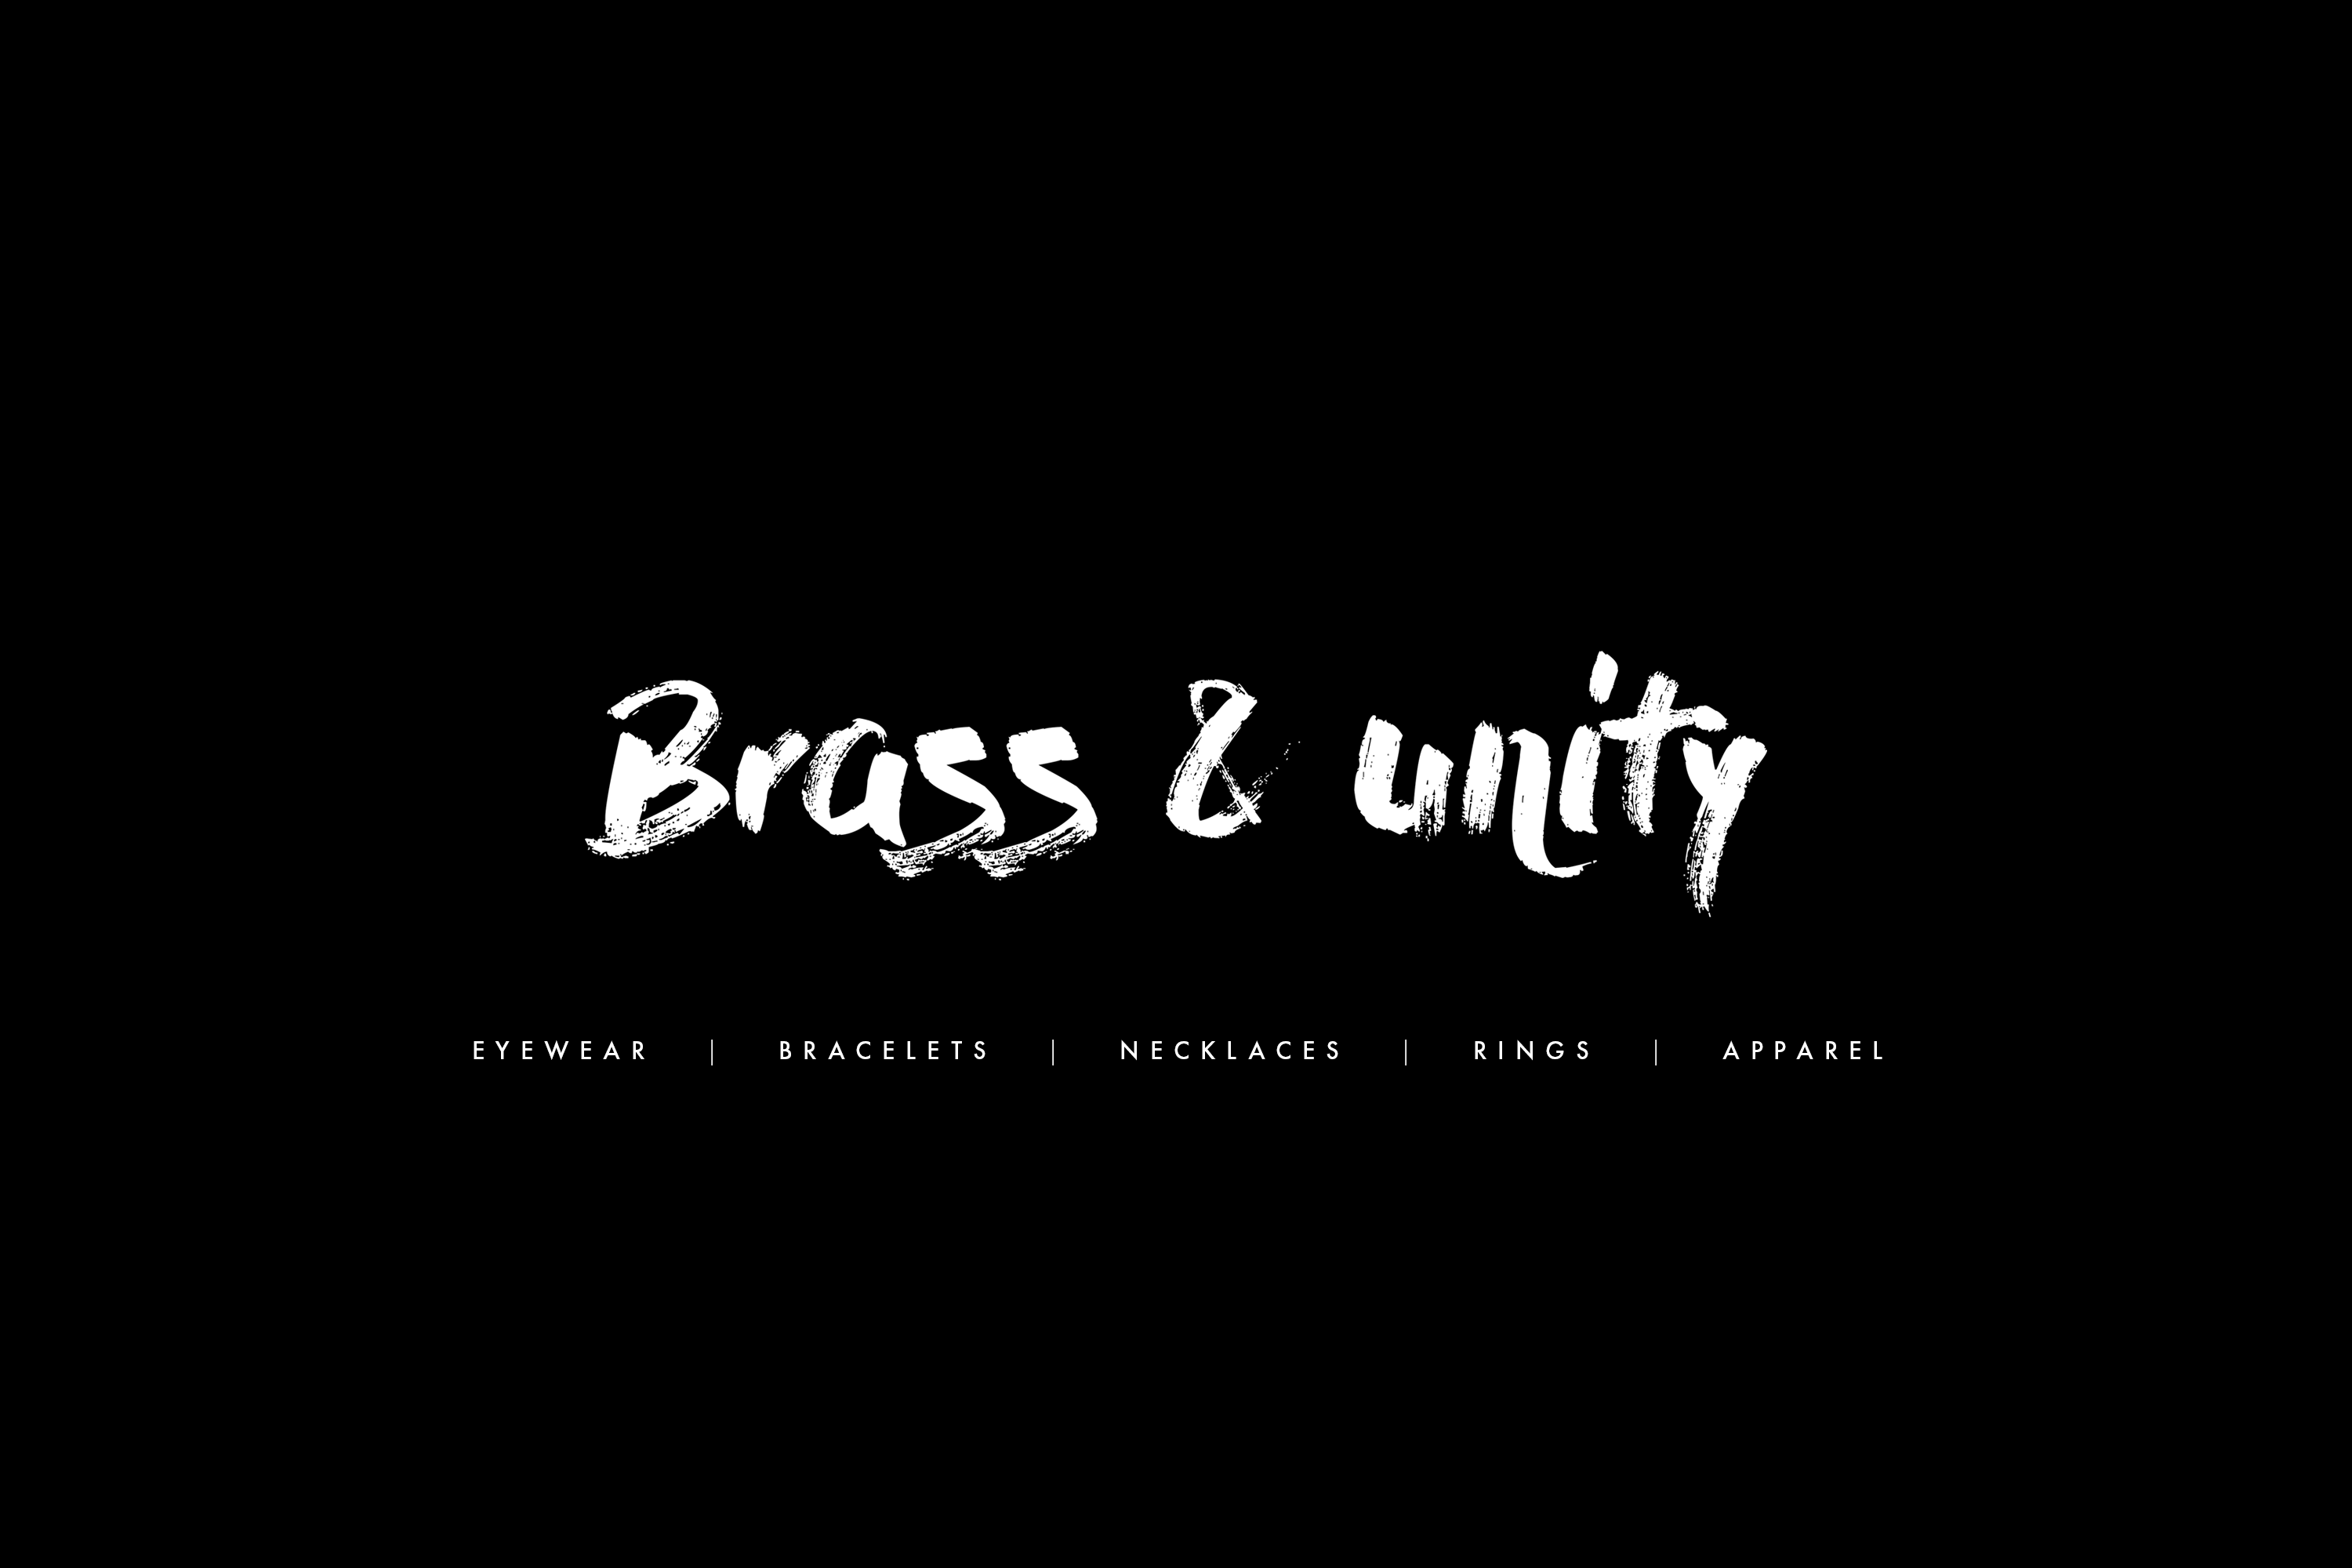 njg-brass-unity-BRANDING-ELEMENTS-ALL-1